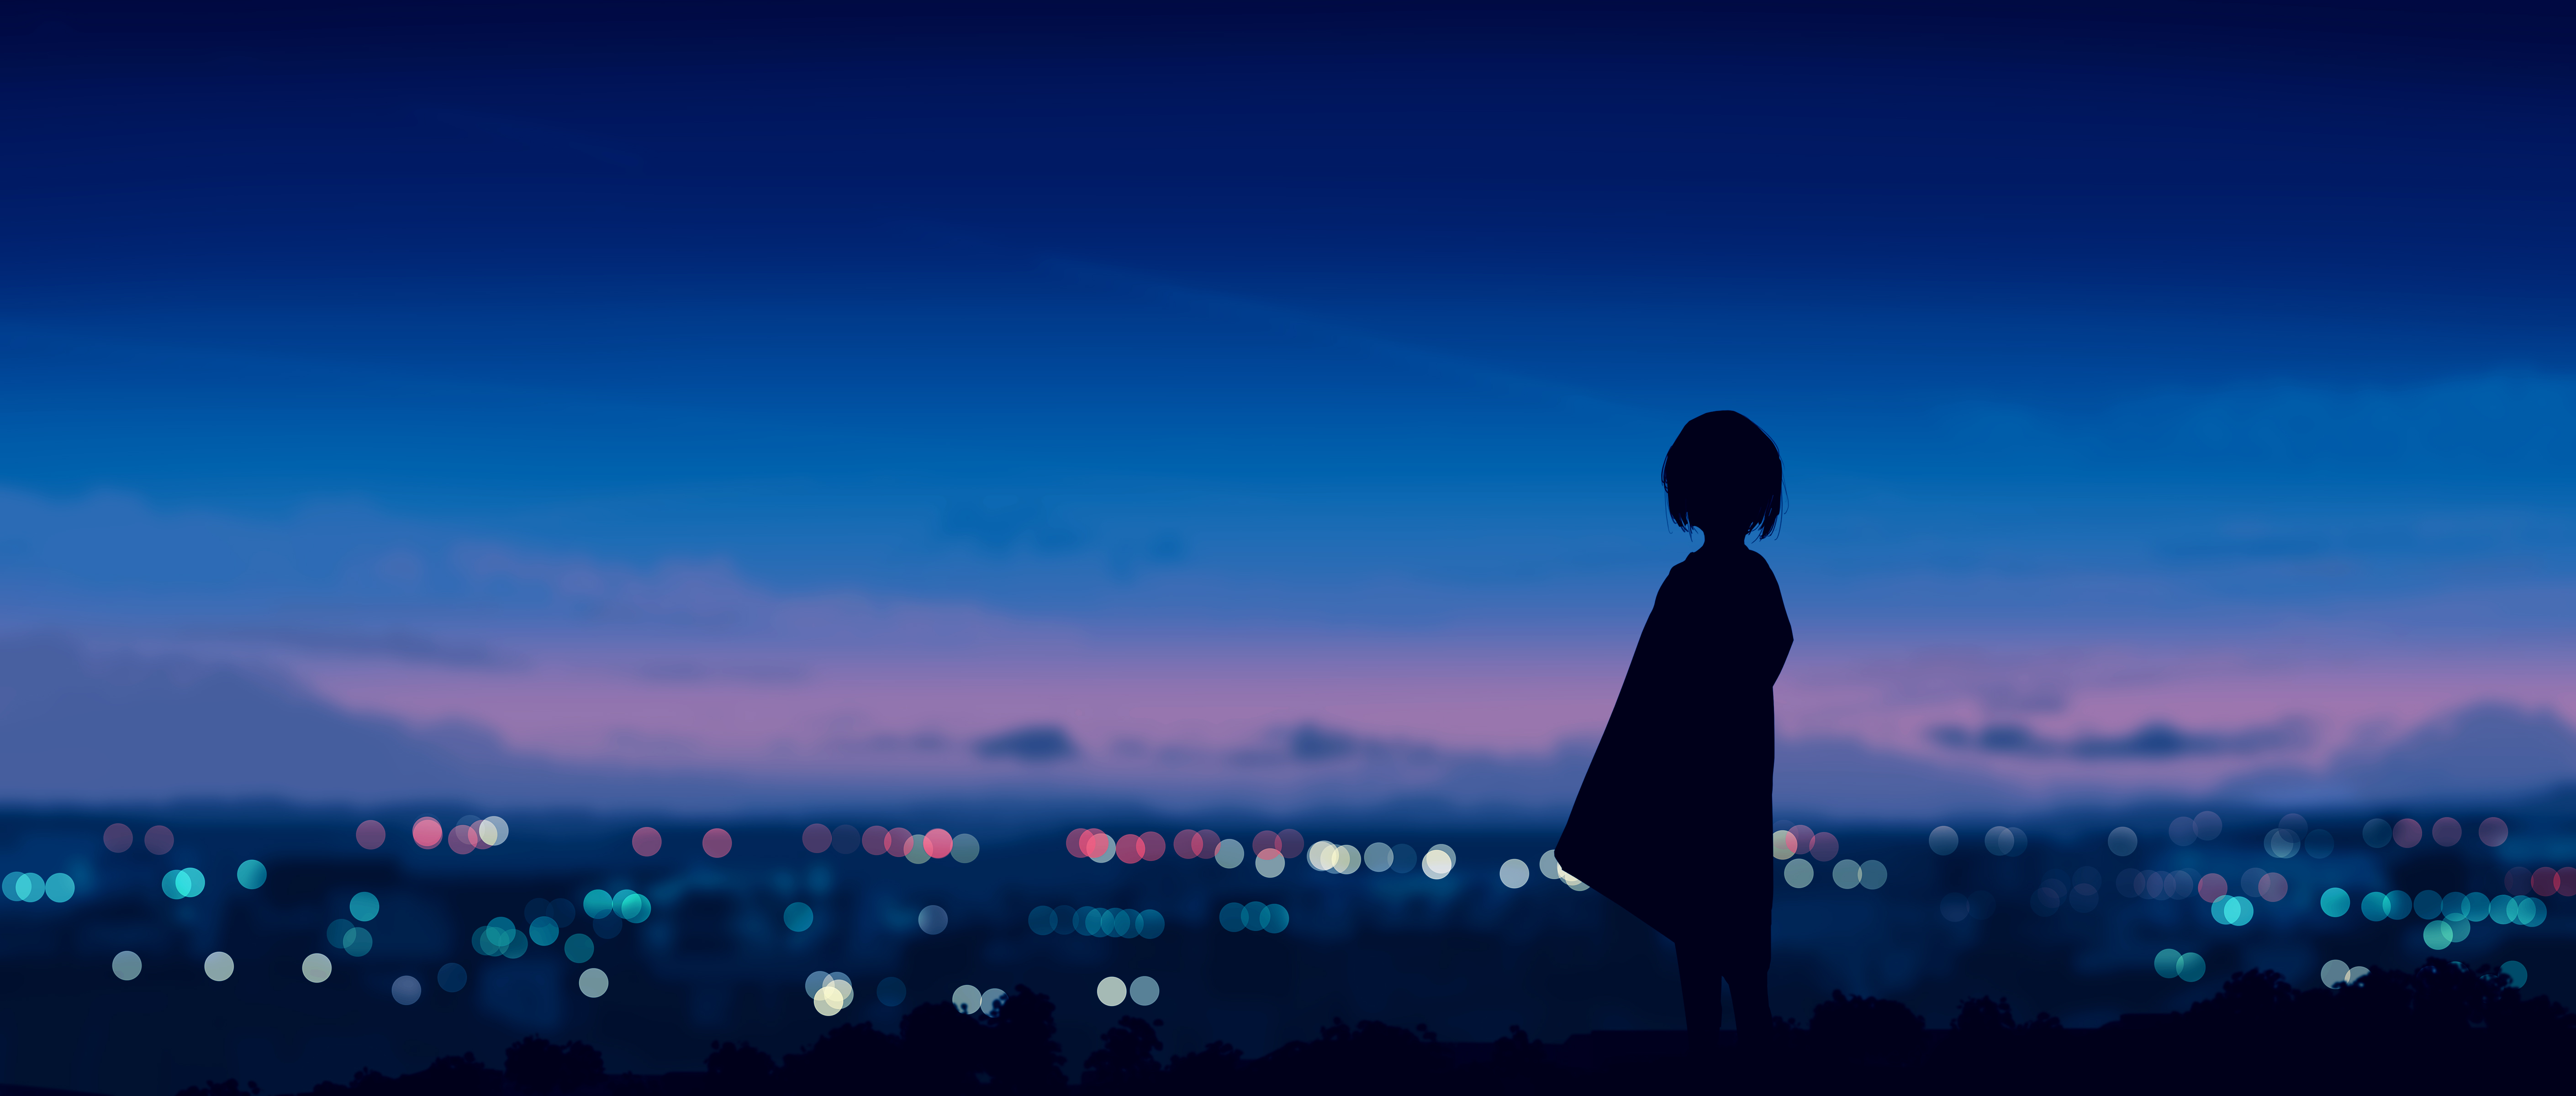 Anime 5640x2400 anime anime girls artwork sky minimalism sunset clouds Gracile illustration wide screen city lights